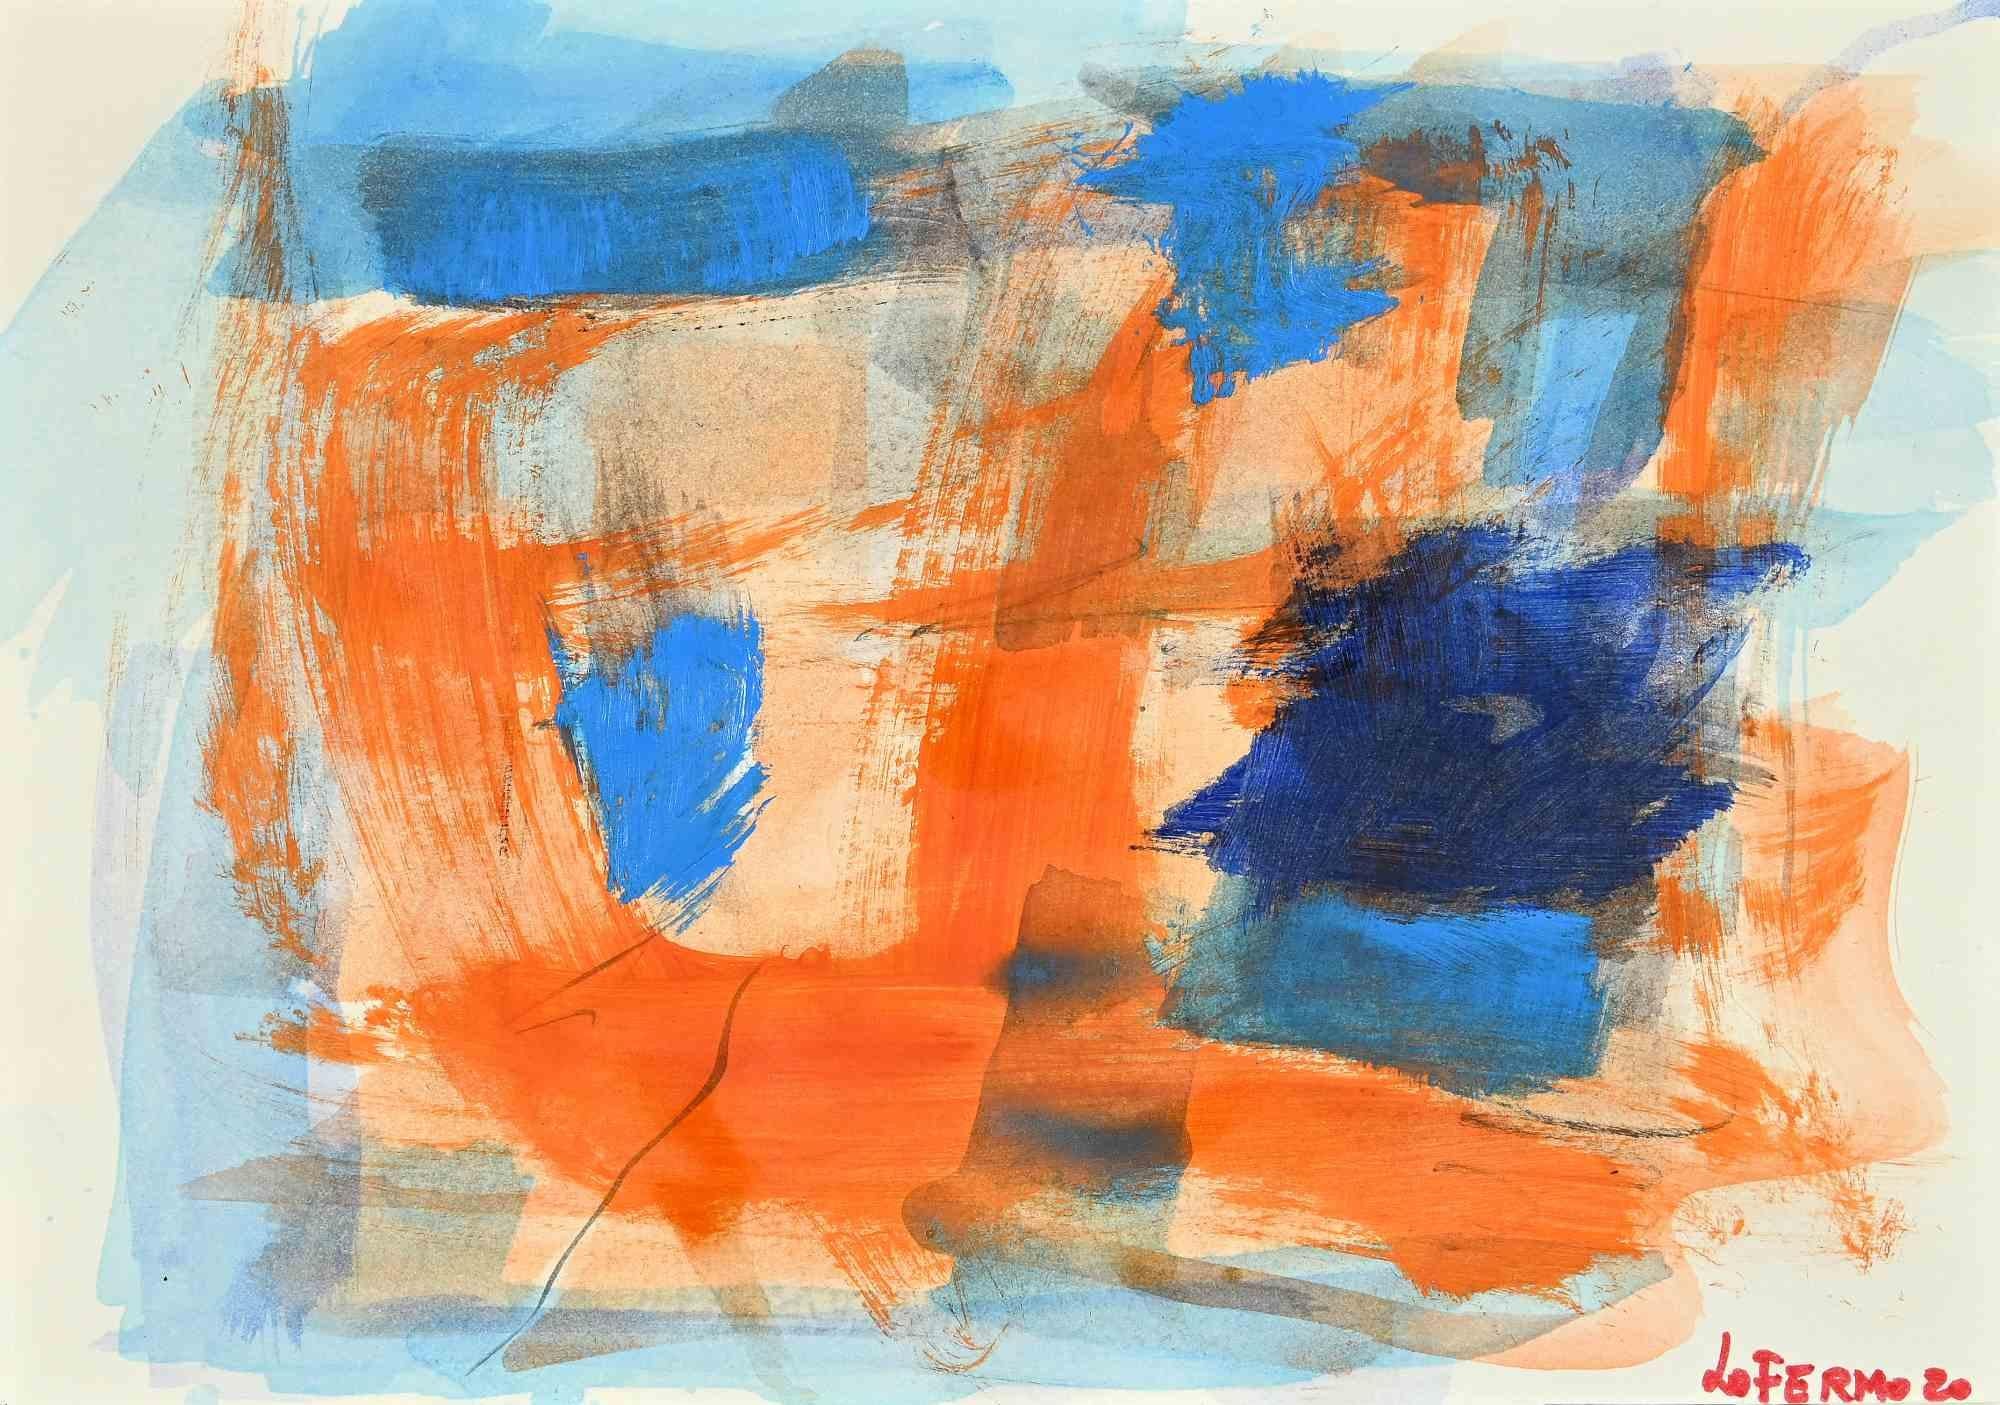 Abstract Composition -Tempera and Watercolor by Giorgio Lo Fermo - 2020